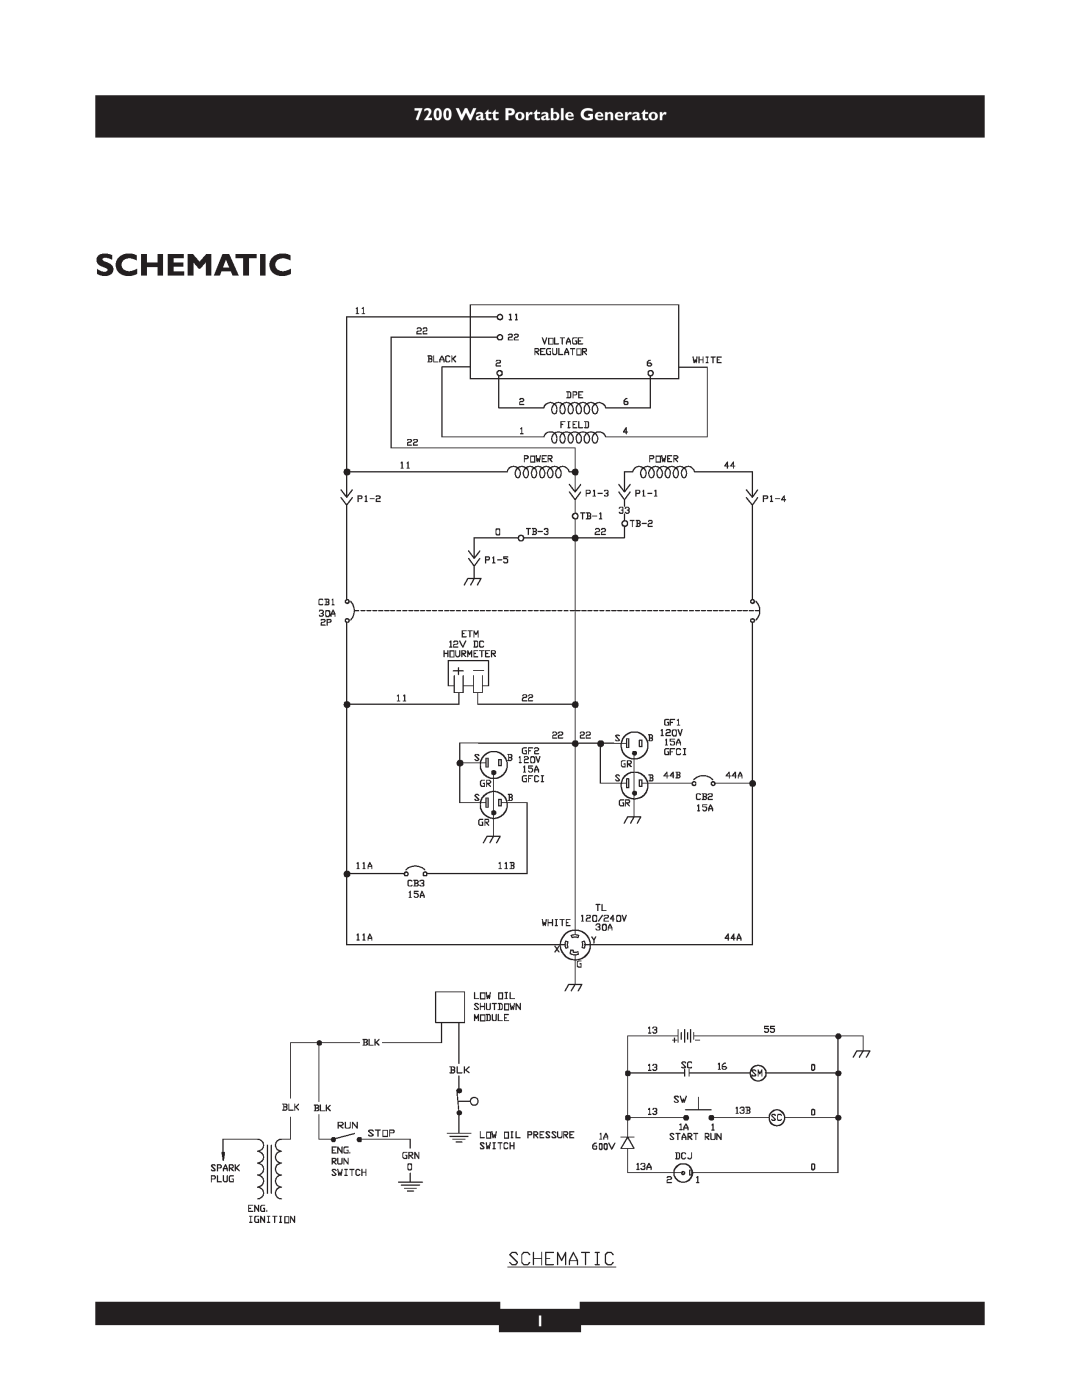 Briggs & Stratton 030254 manual Schematic, Watt Portable Generator 